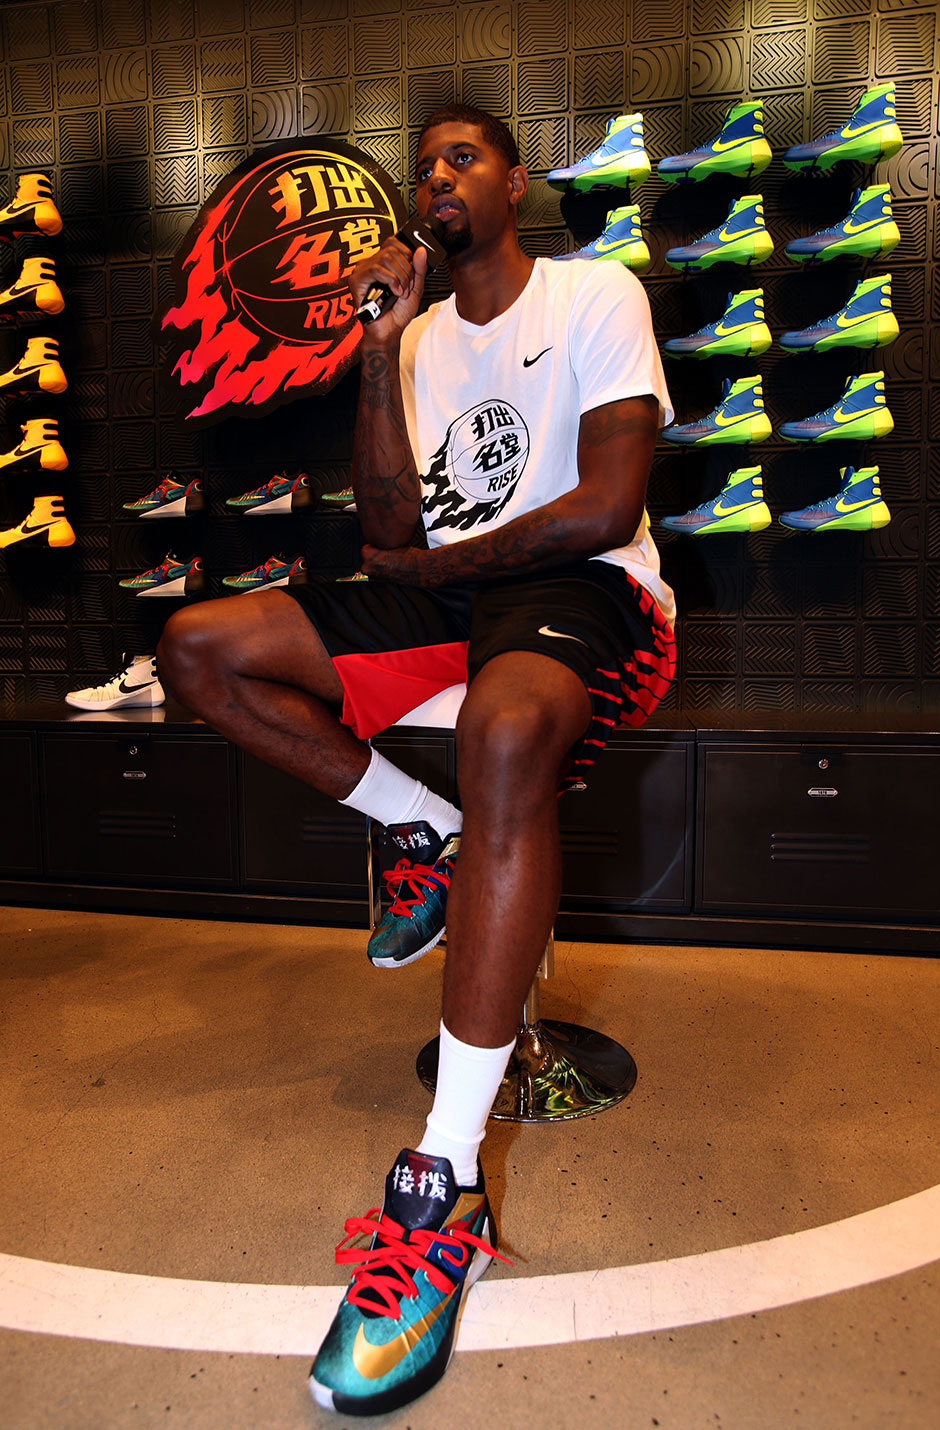 Paul George in his new Nike Hyperdunk 2015 low PE